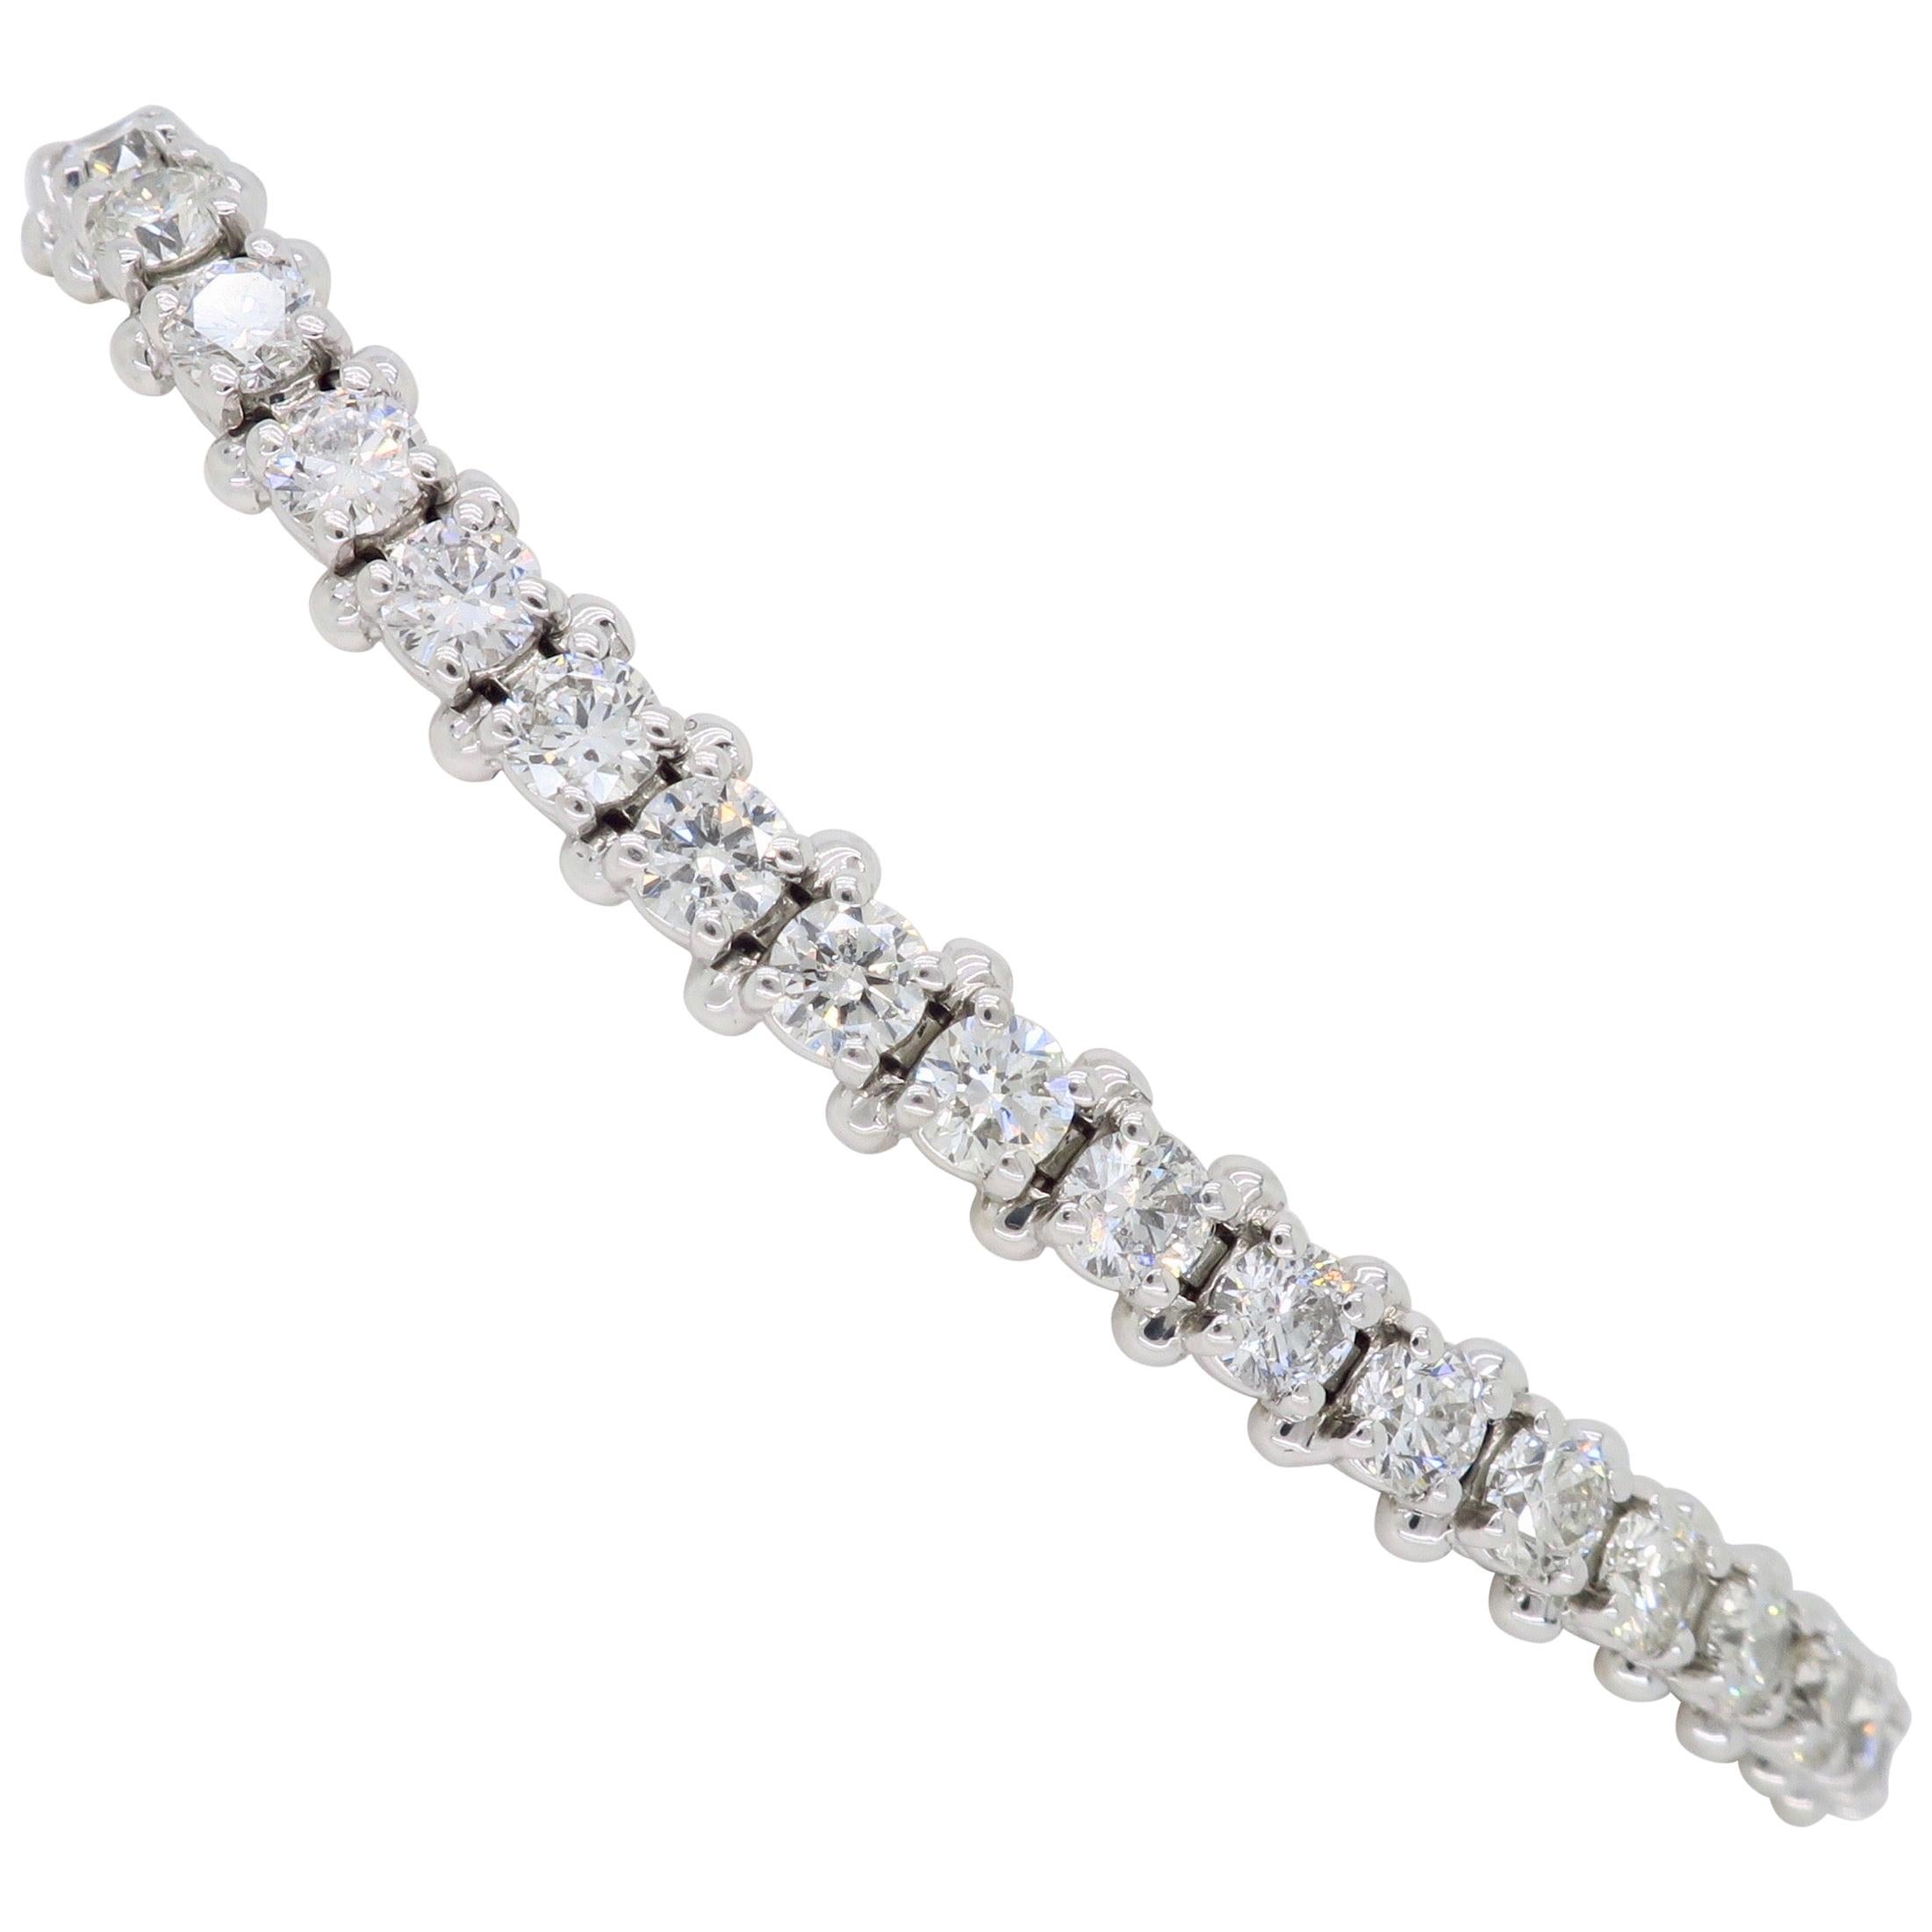 5 carat Diamond Tennis Bracelet  18ct White Gold  Culet Jewellery